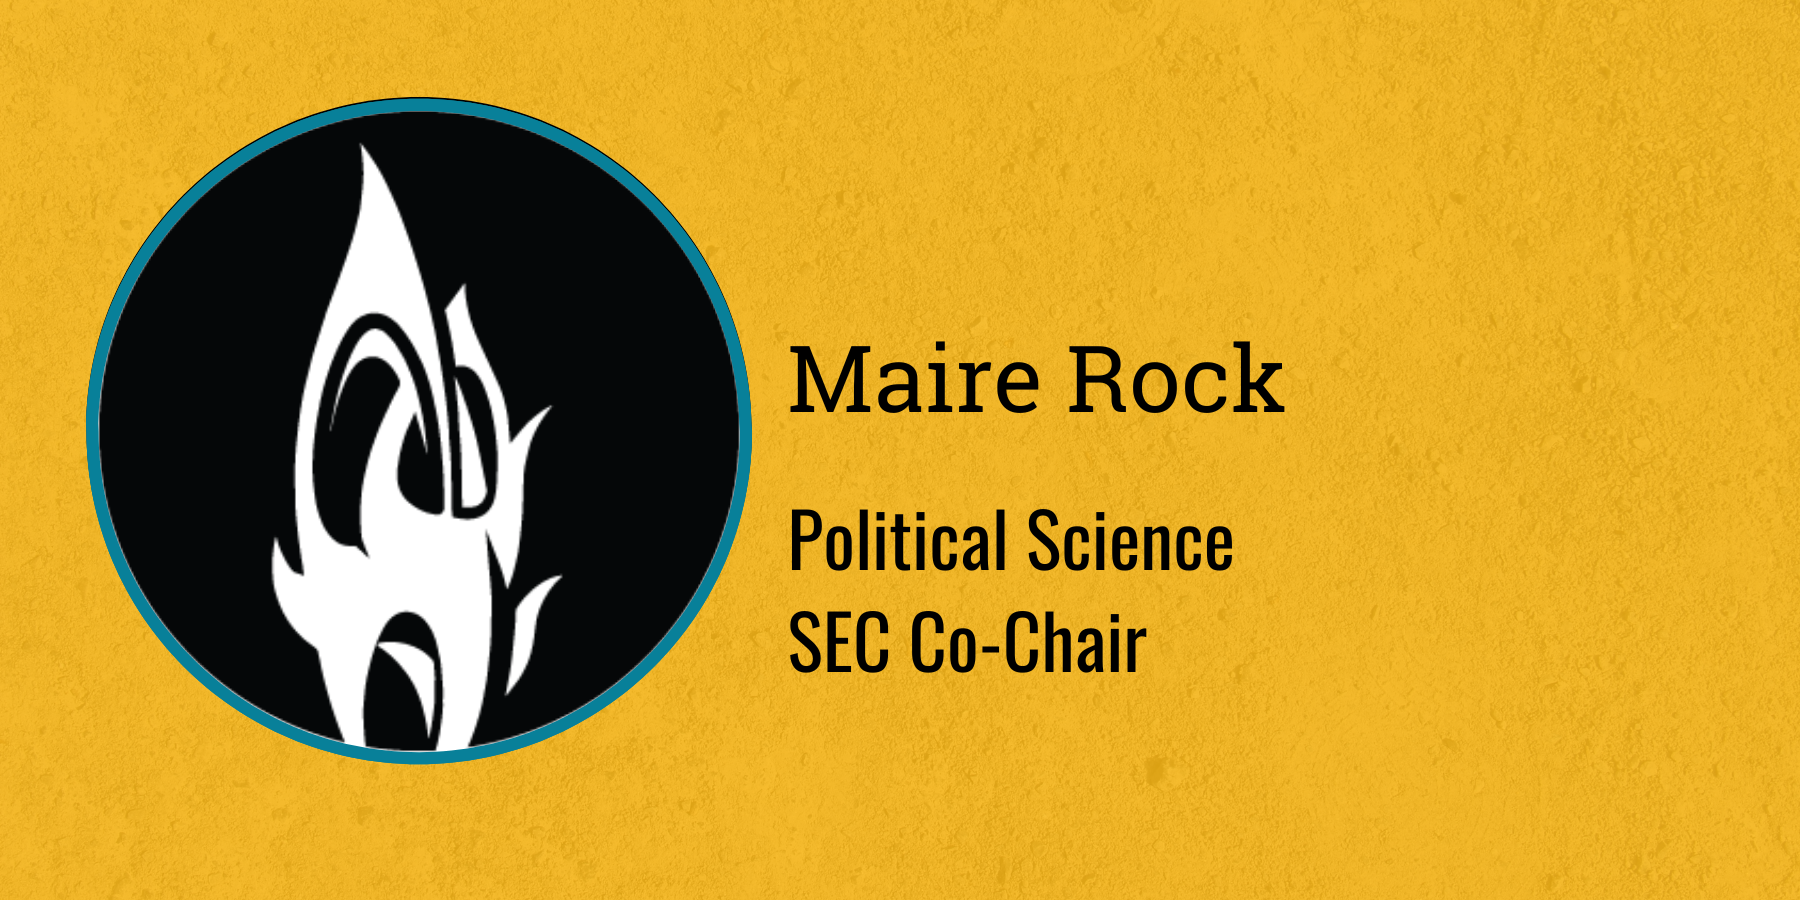 Maire Rock
Political Science
SEC Co-Chair